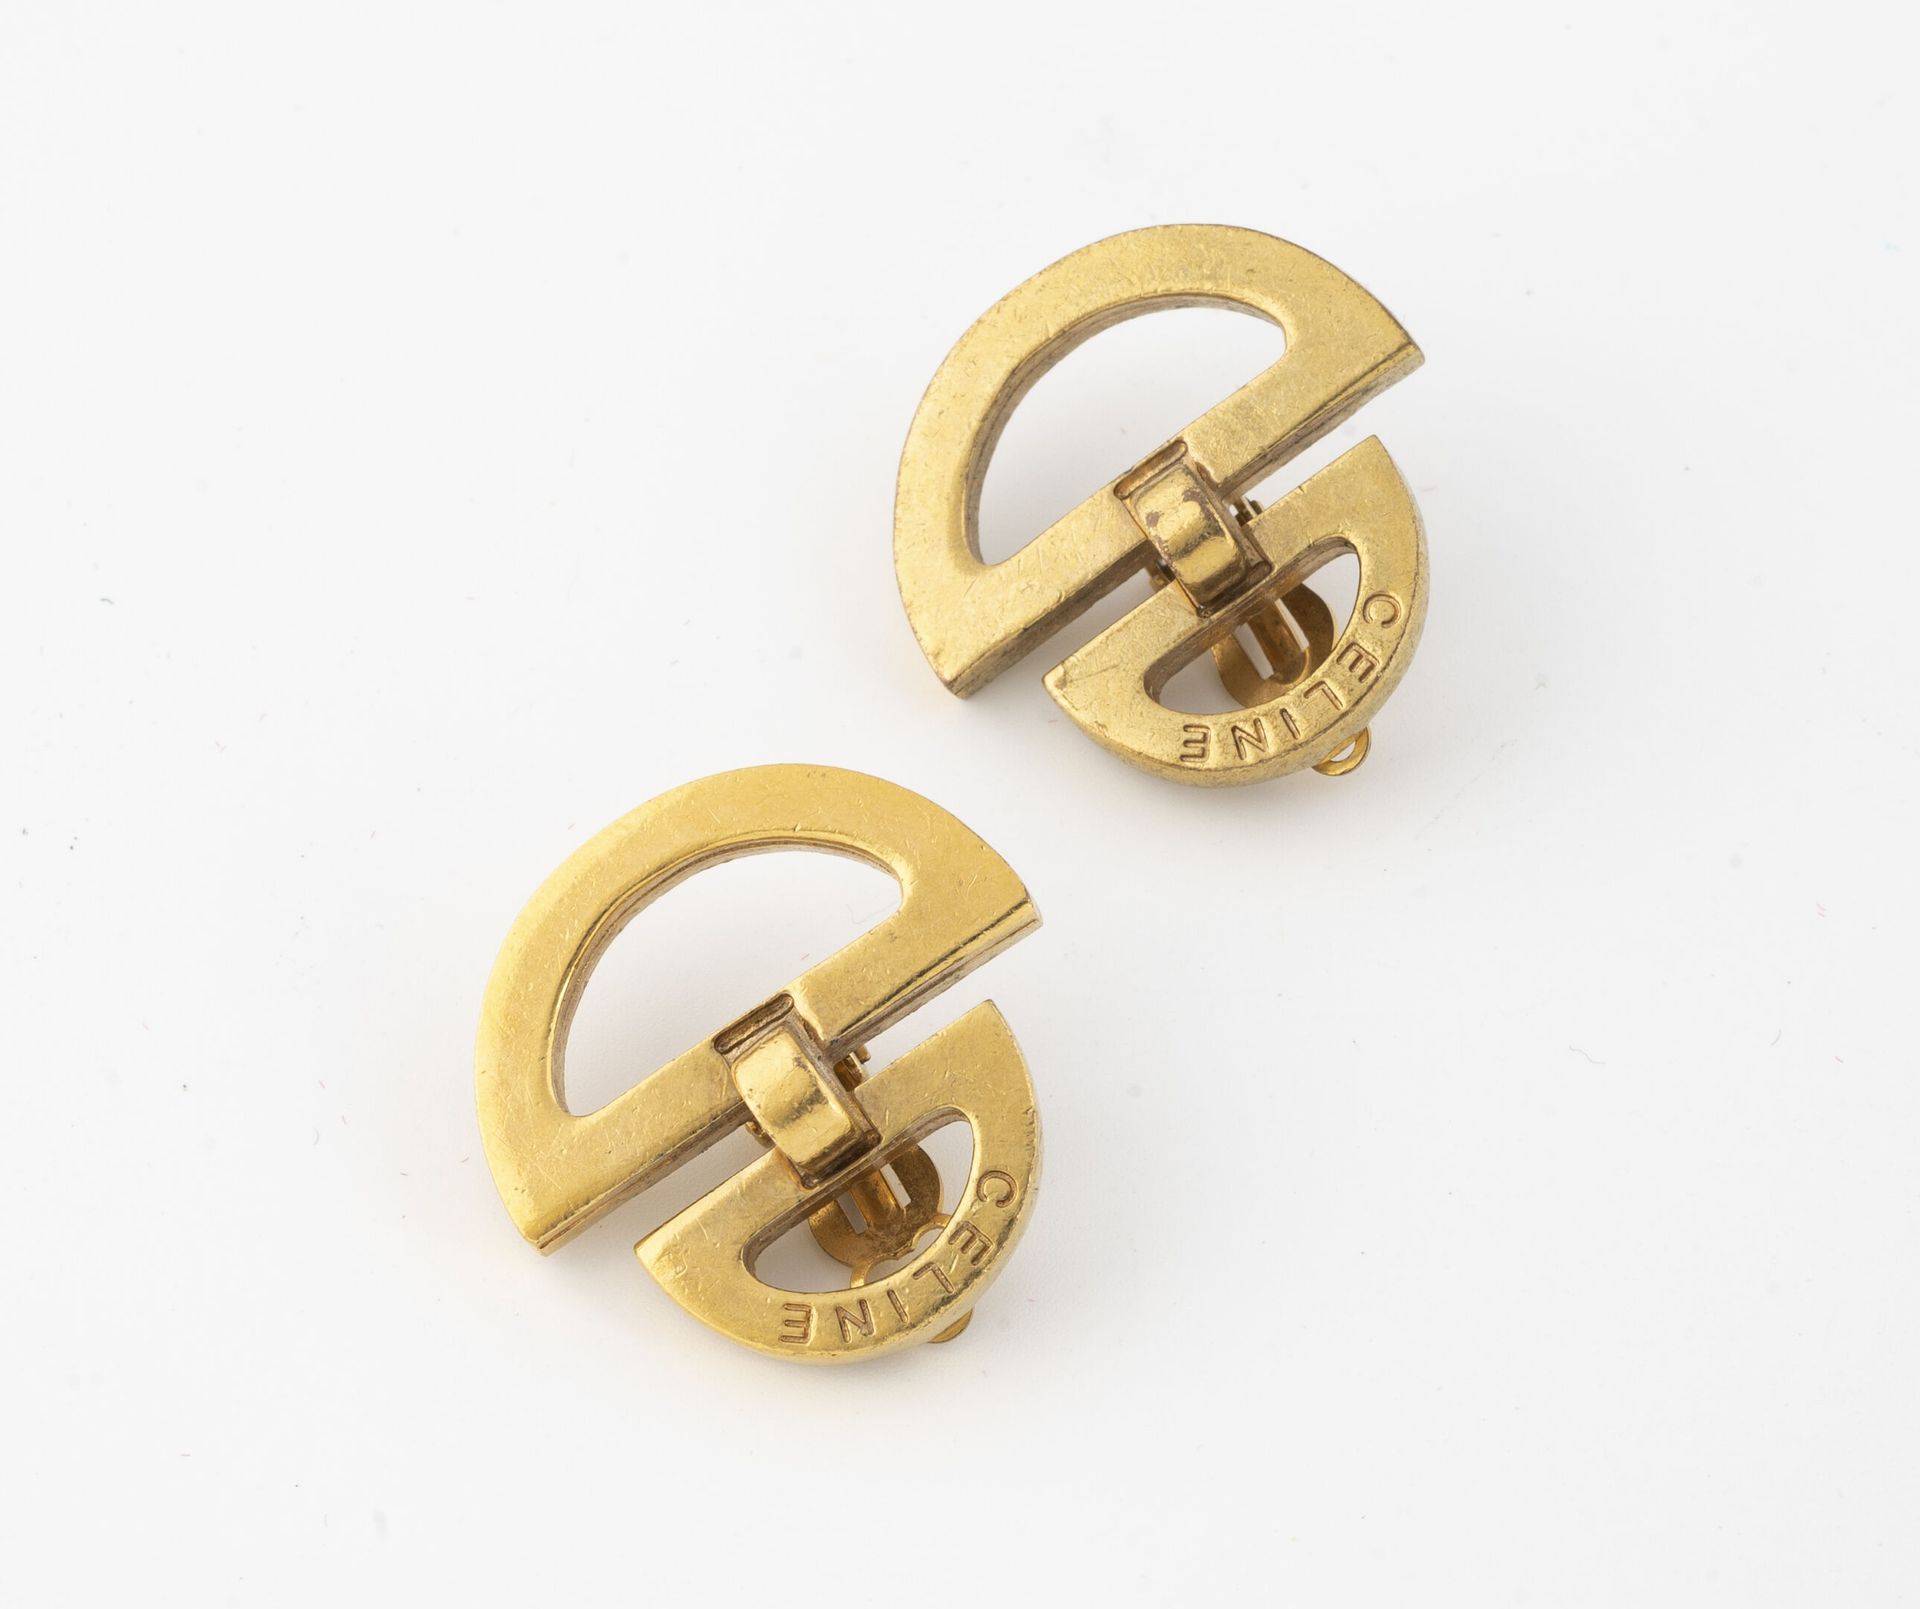 CELINE 一对鎏金金属耳夹，镂空的形式是两个叠加的半圆，有签名。

背面有标记。

用于非穿孔耳的系统。 

磨损和划痕